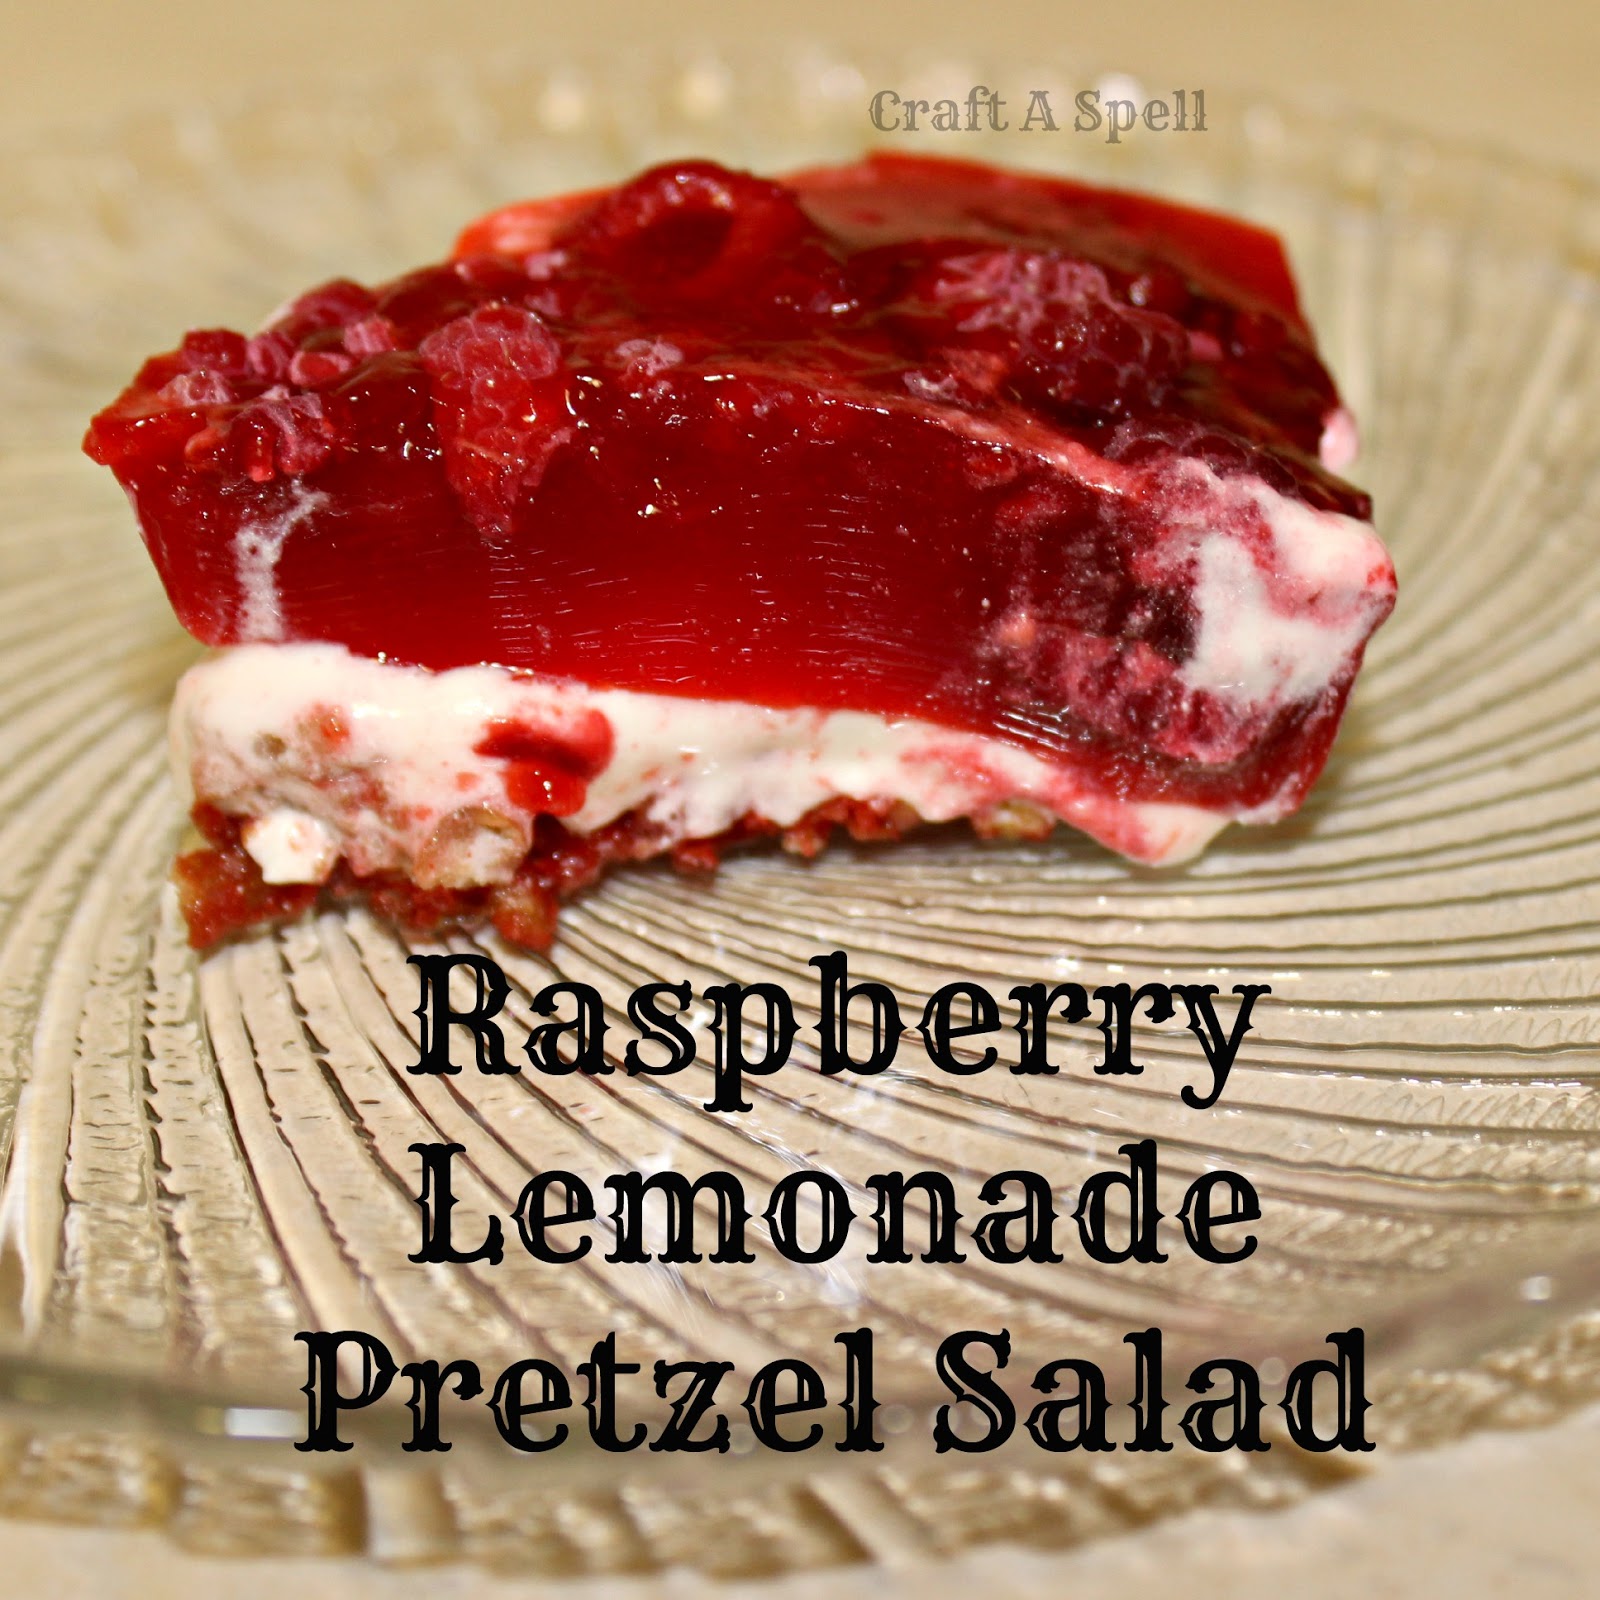 Craft A Spell: Raspberry Lemonade Pretzel Salad